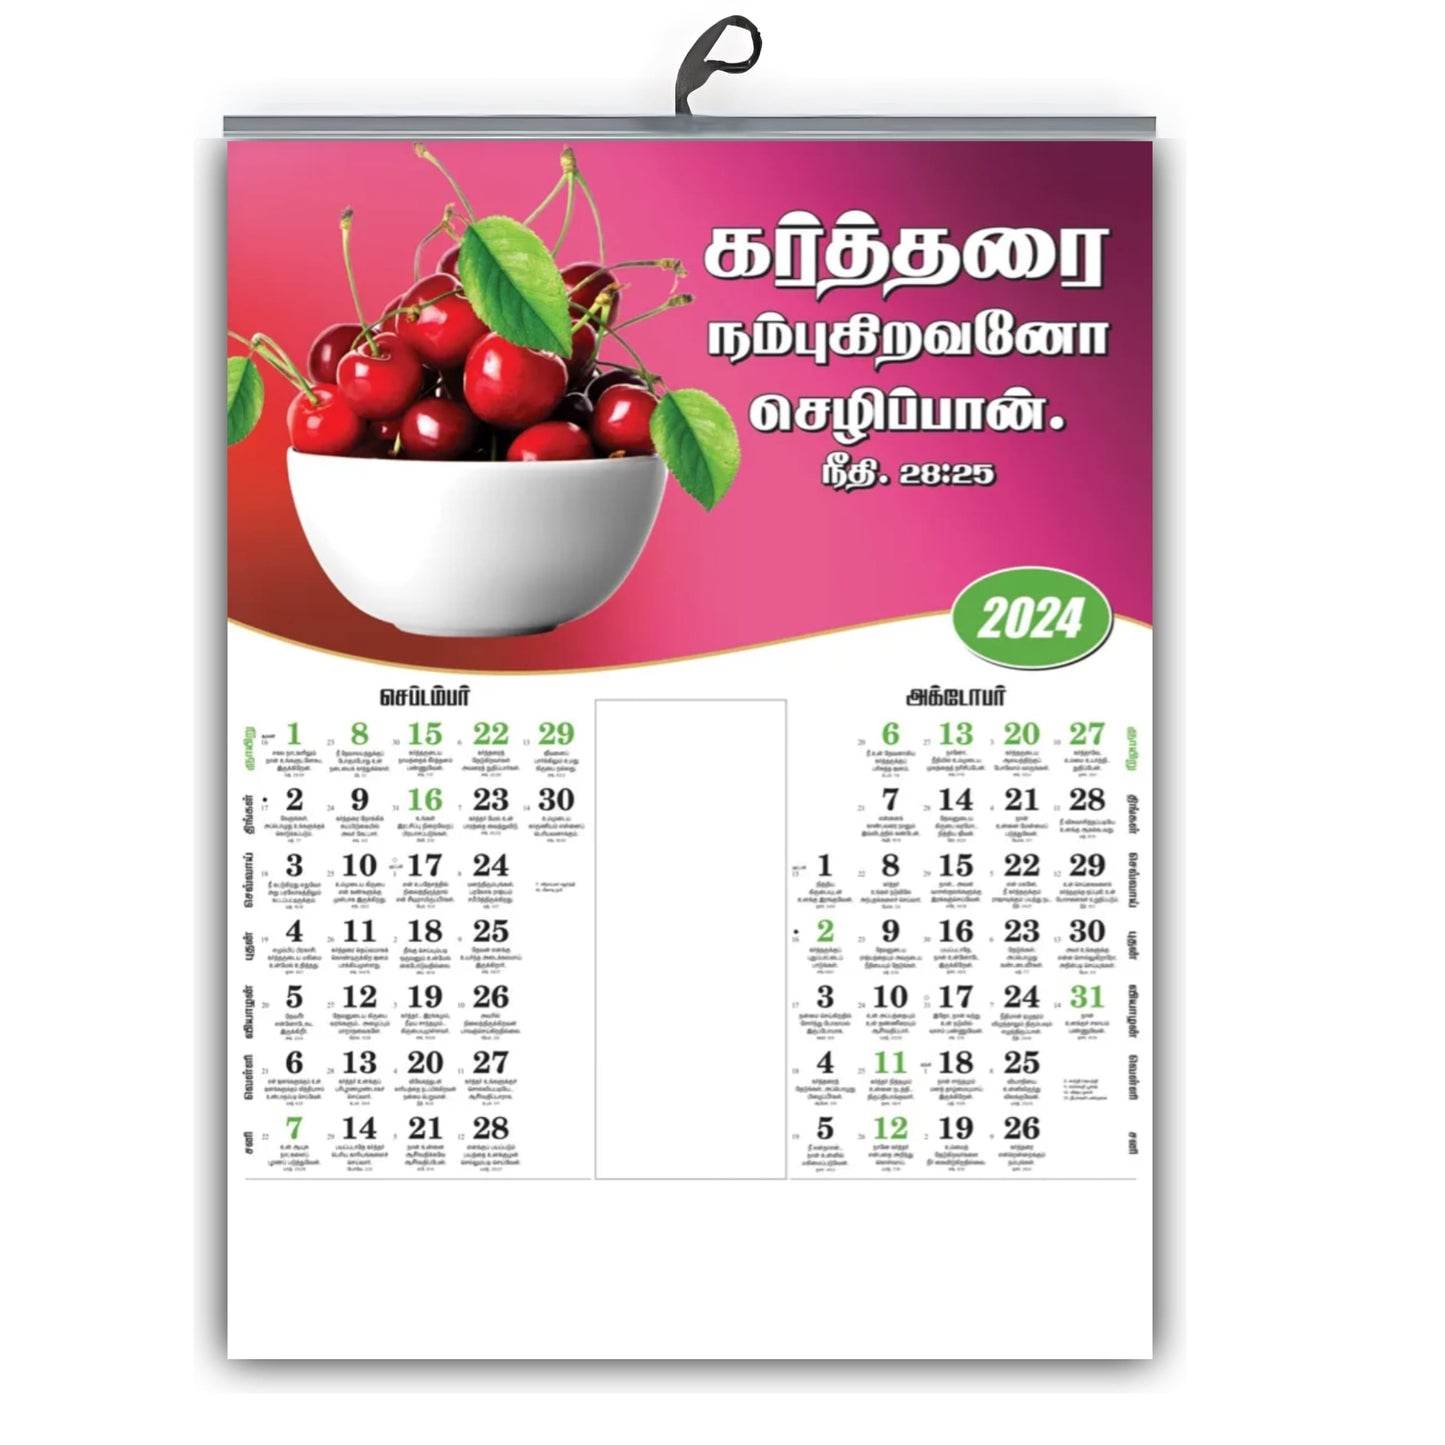 2024 Tamil Bible Verse Wall Calendar - Captivating Scenery & Uplifting Verses